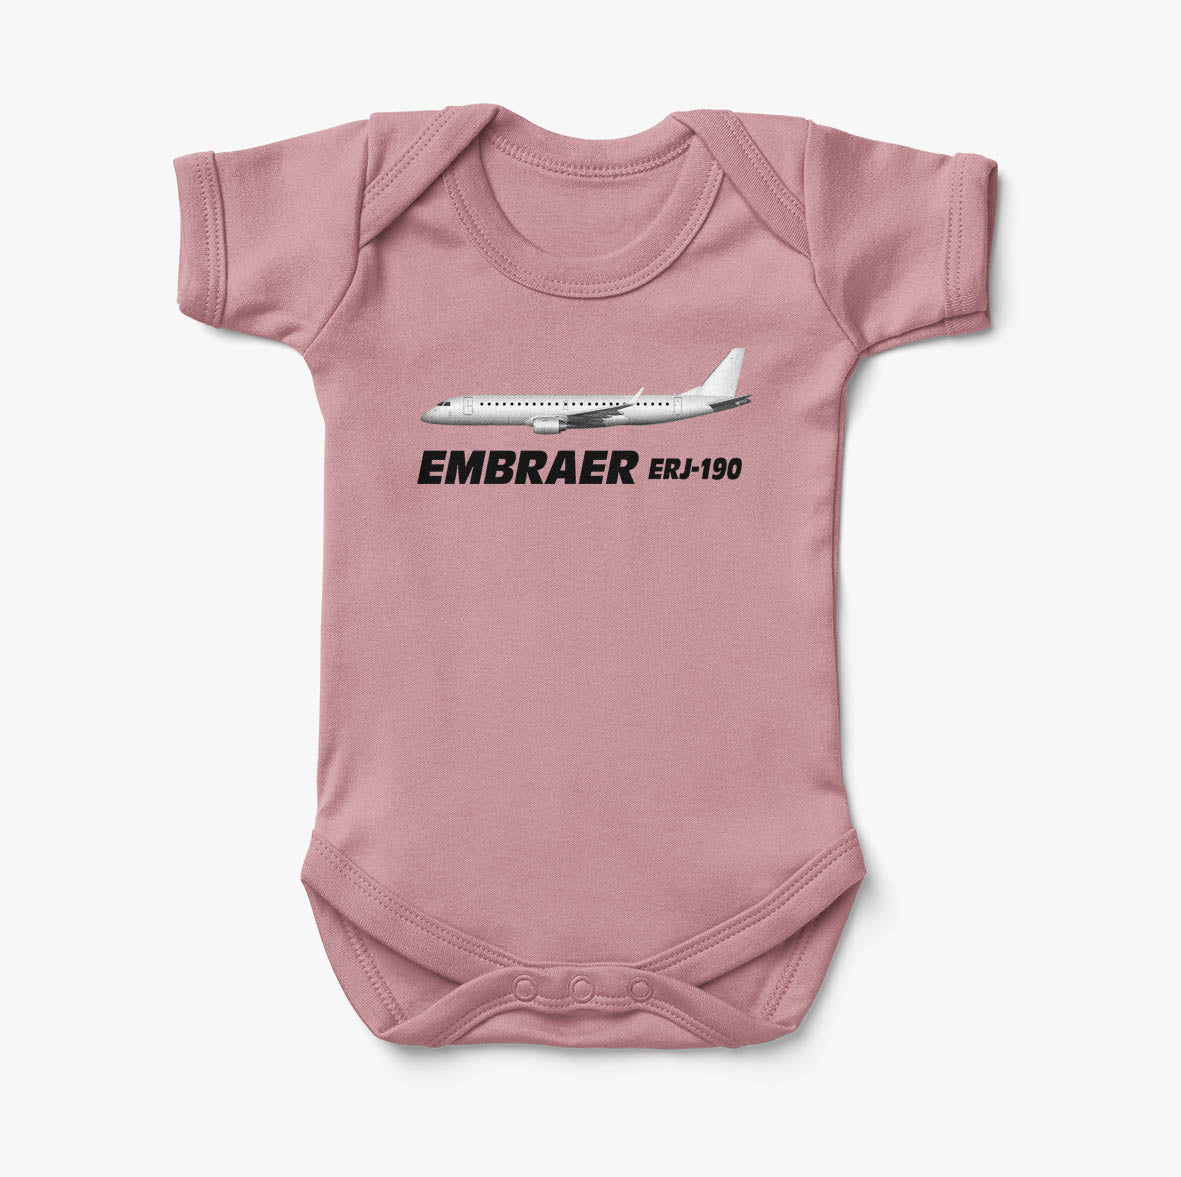 The Embraer ERJ-190 Designed Baby Bodysuits